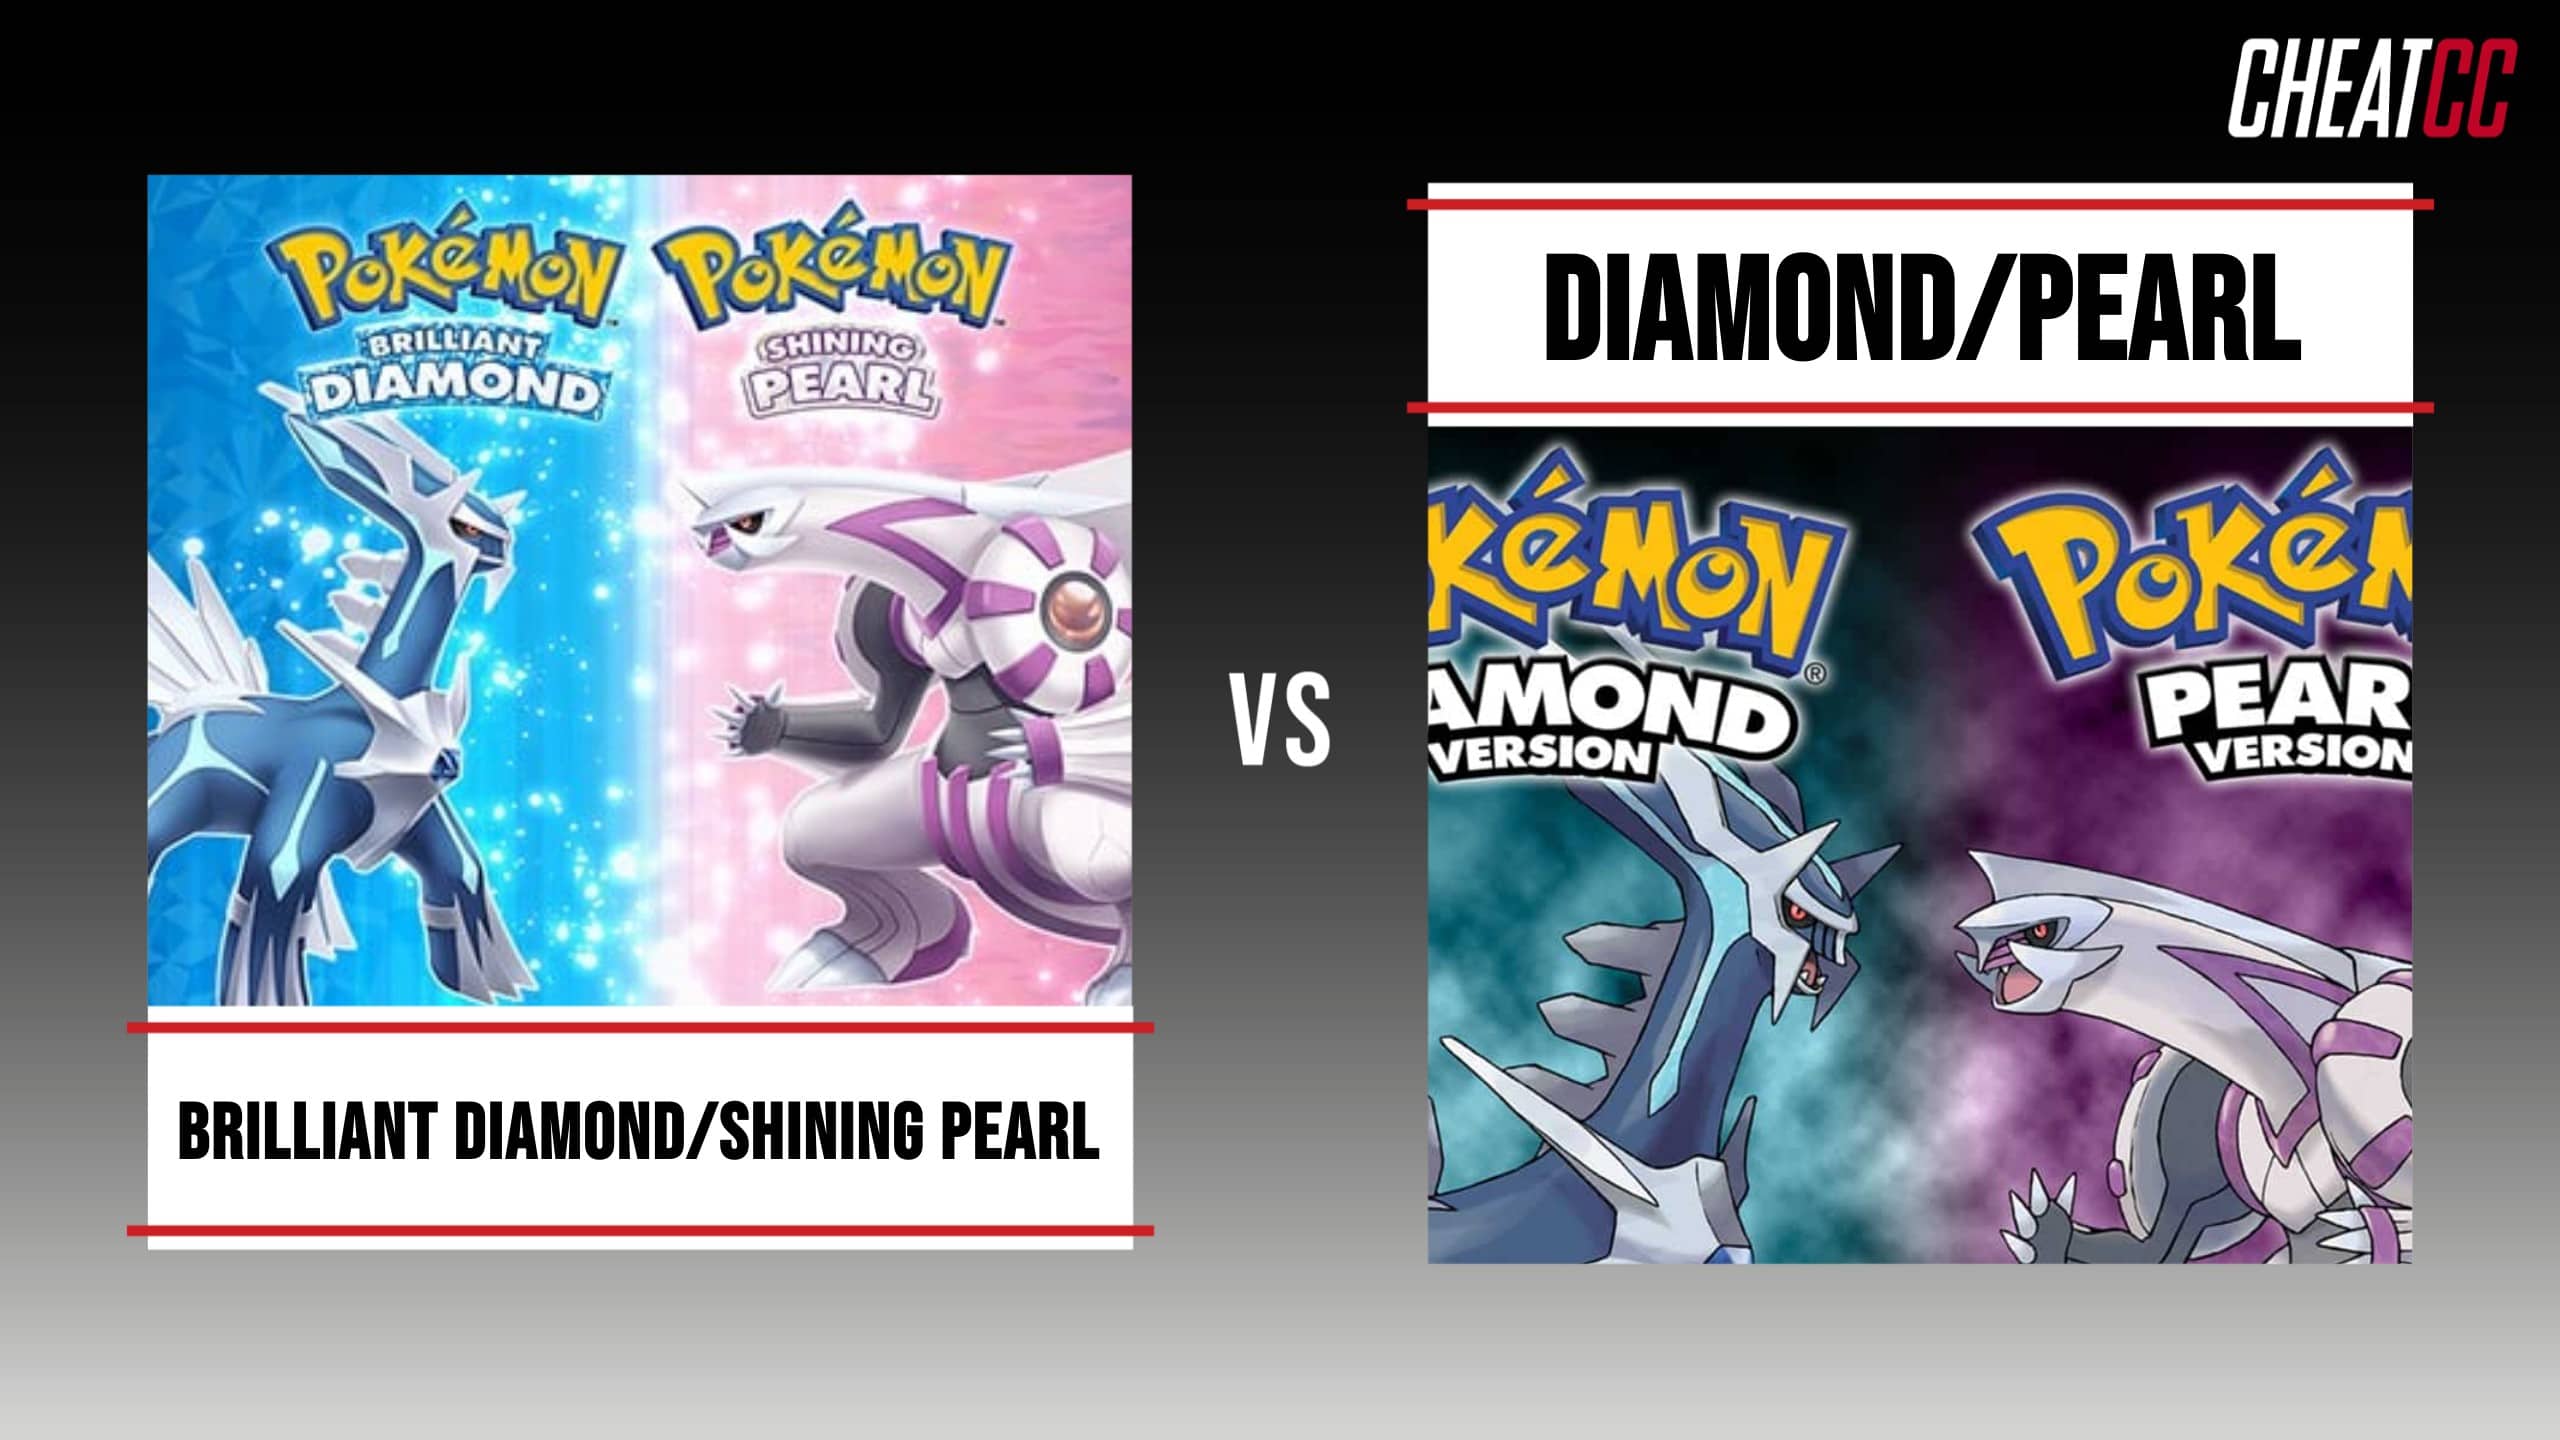 Pokémon Brilliant Diamond and Shining Pearl